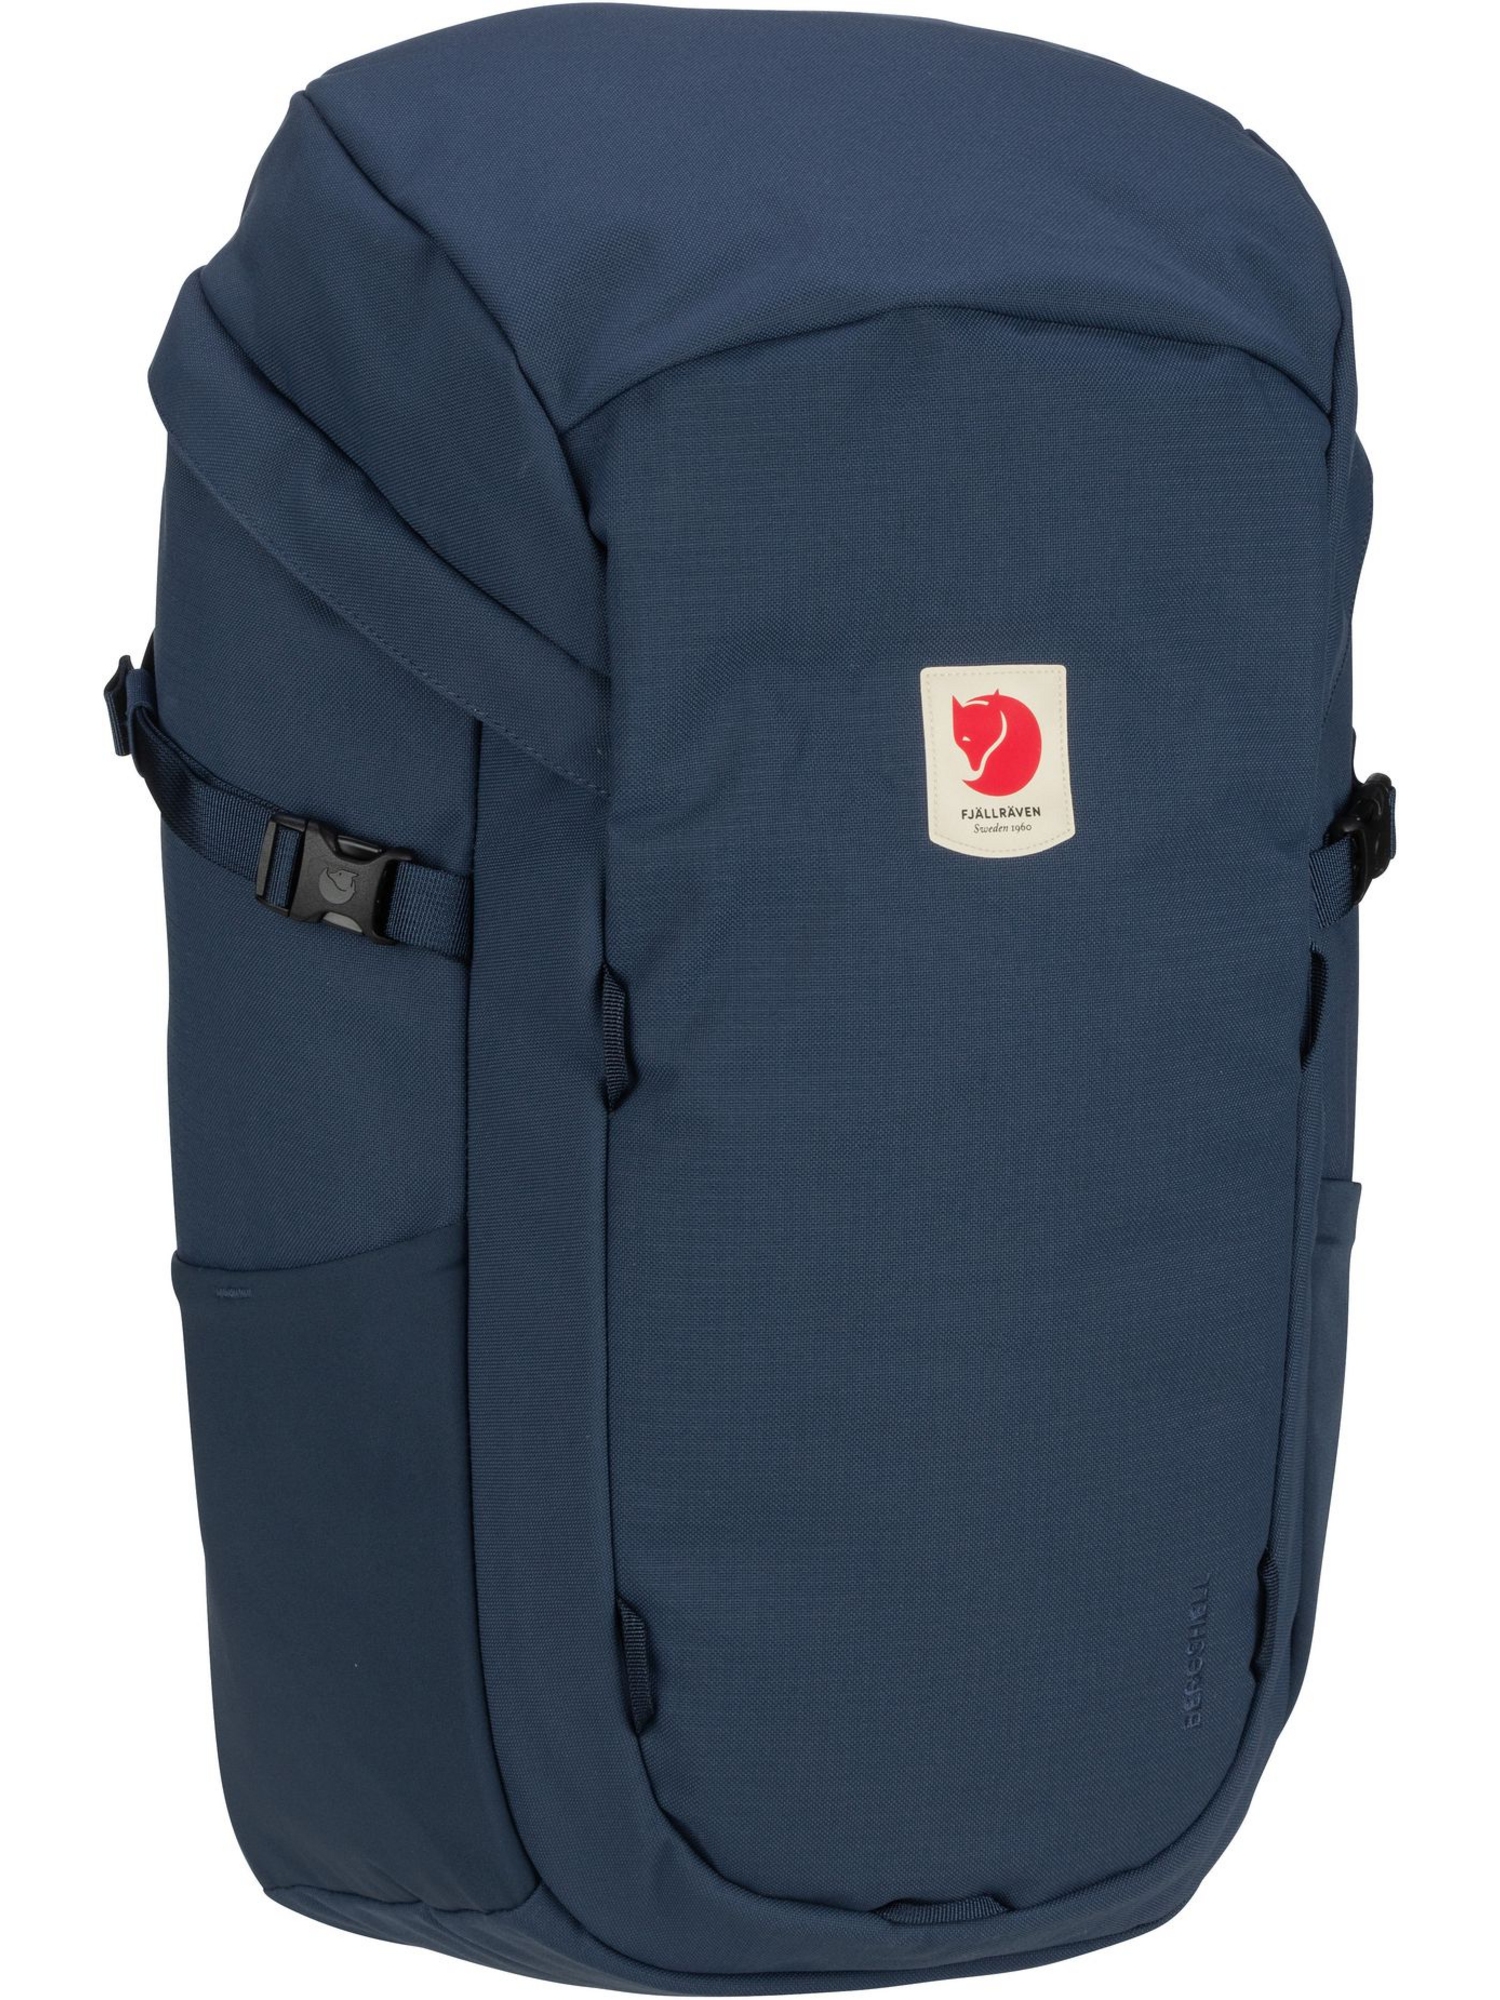 Рюкзак FJÄLLRÄVEN / Backpack Ulvö 30, цвет Mountain Blue сумка рюкзак ulvö среднего размера fjällräven темно серый